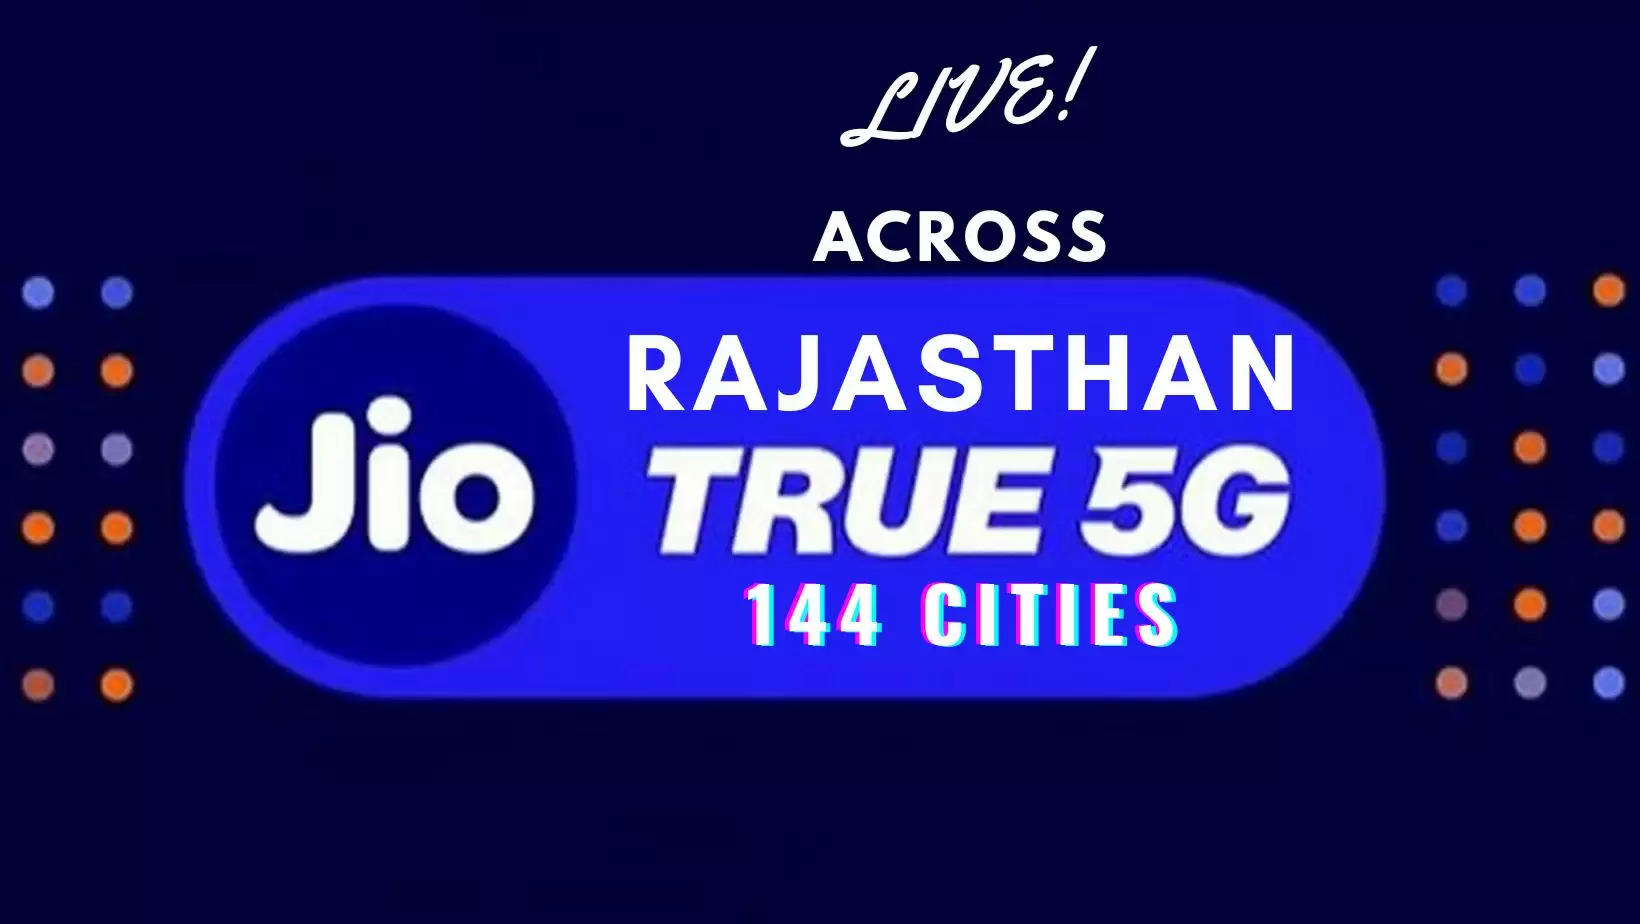 Reliance JIO USERS IN 144 CITIES/ TOWNS OF RAJASTHAN TO ENJOY JIO TRUE 5G, Reliance Jio 5G in Jaipur, Jodhpur, Kota, Ajmer, Udaipur, Bikaner, Alwar, Sikar, Barmer, Bhilwara